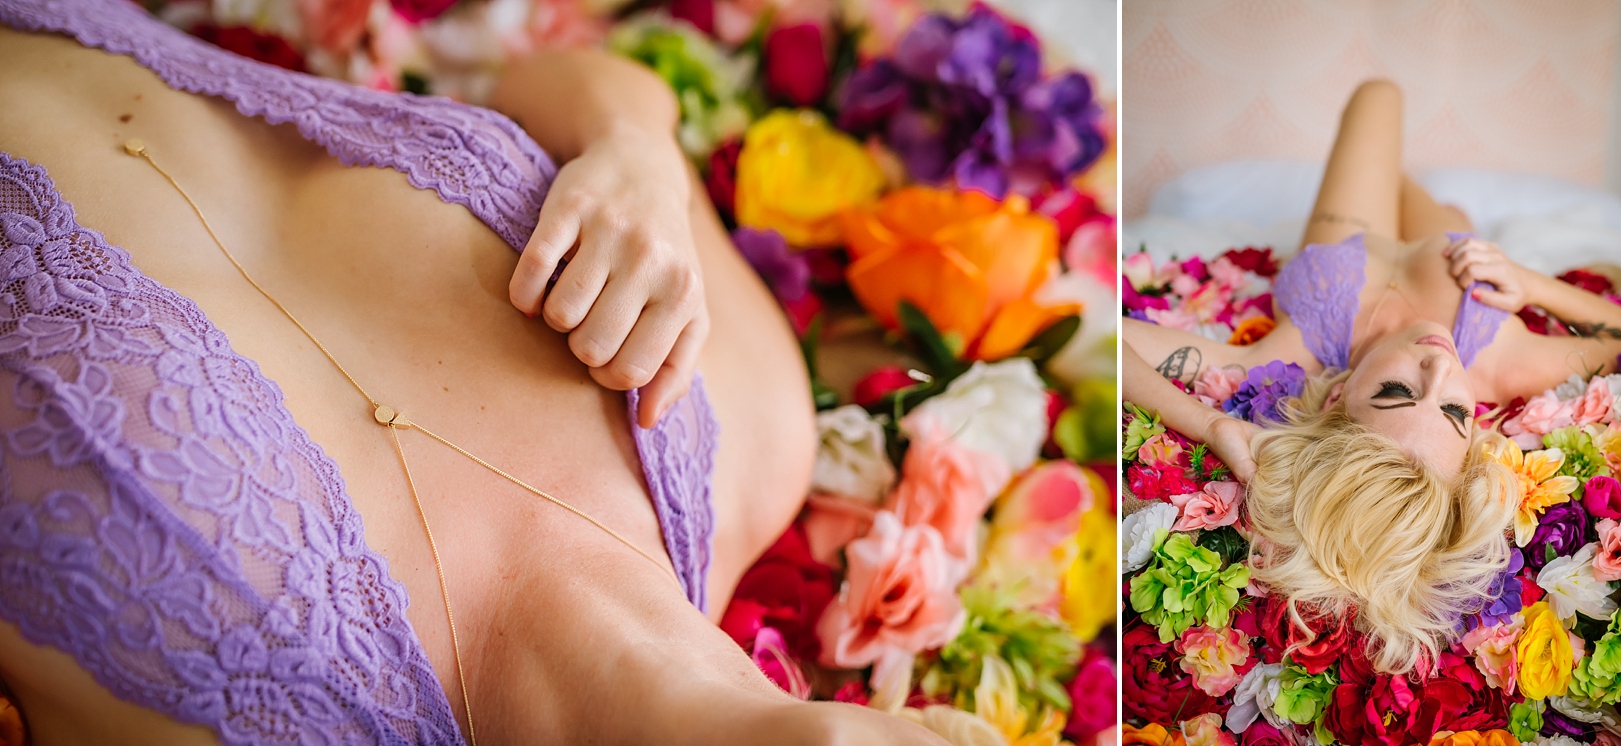 creative-hipster-boudoir-photos-tampa-studio-flowers-bathtub_0002.jpg